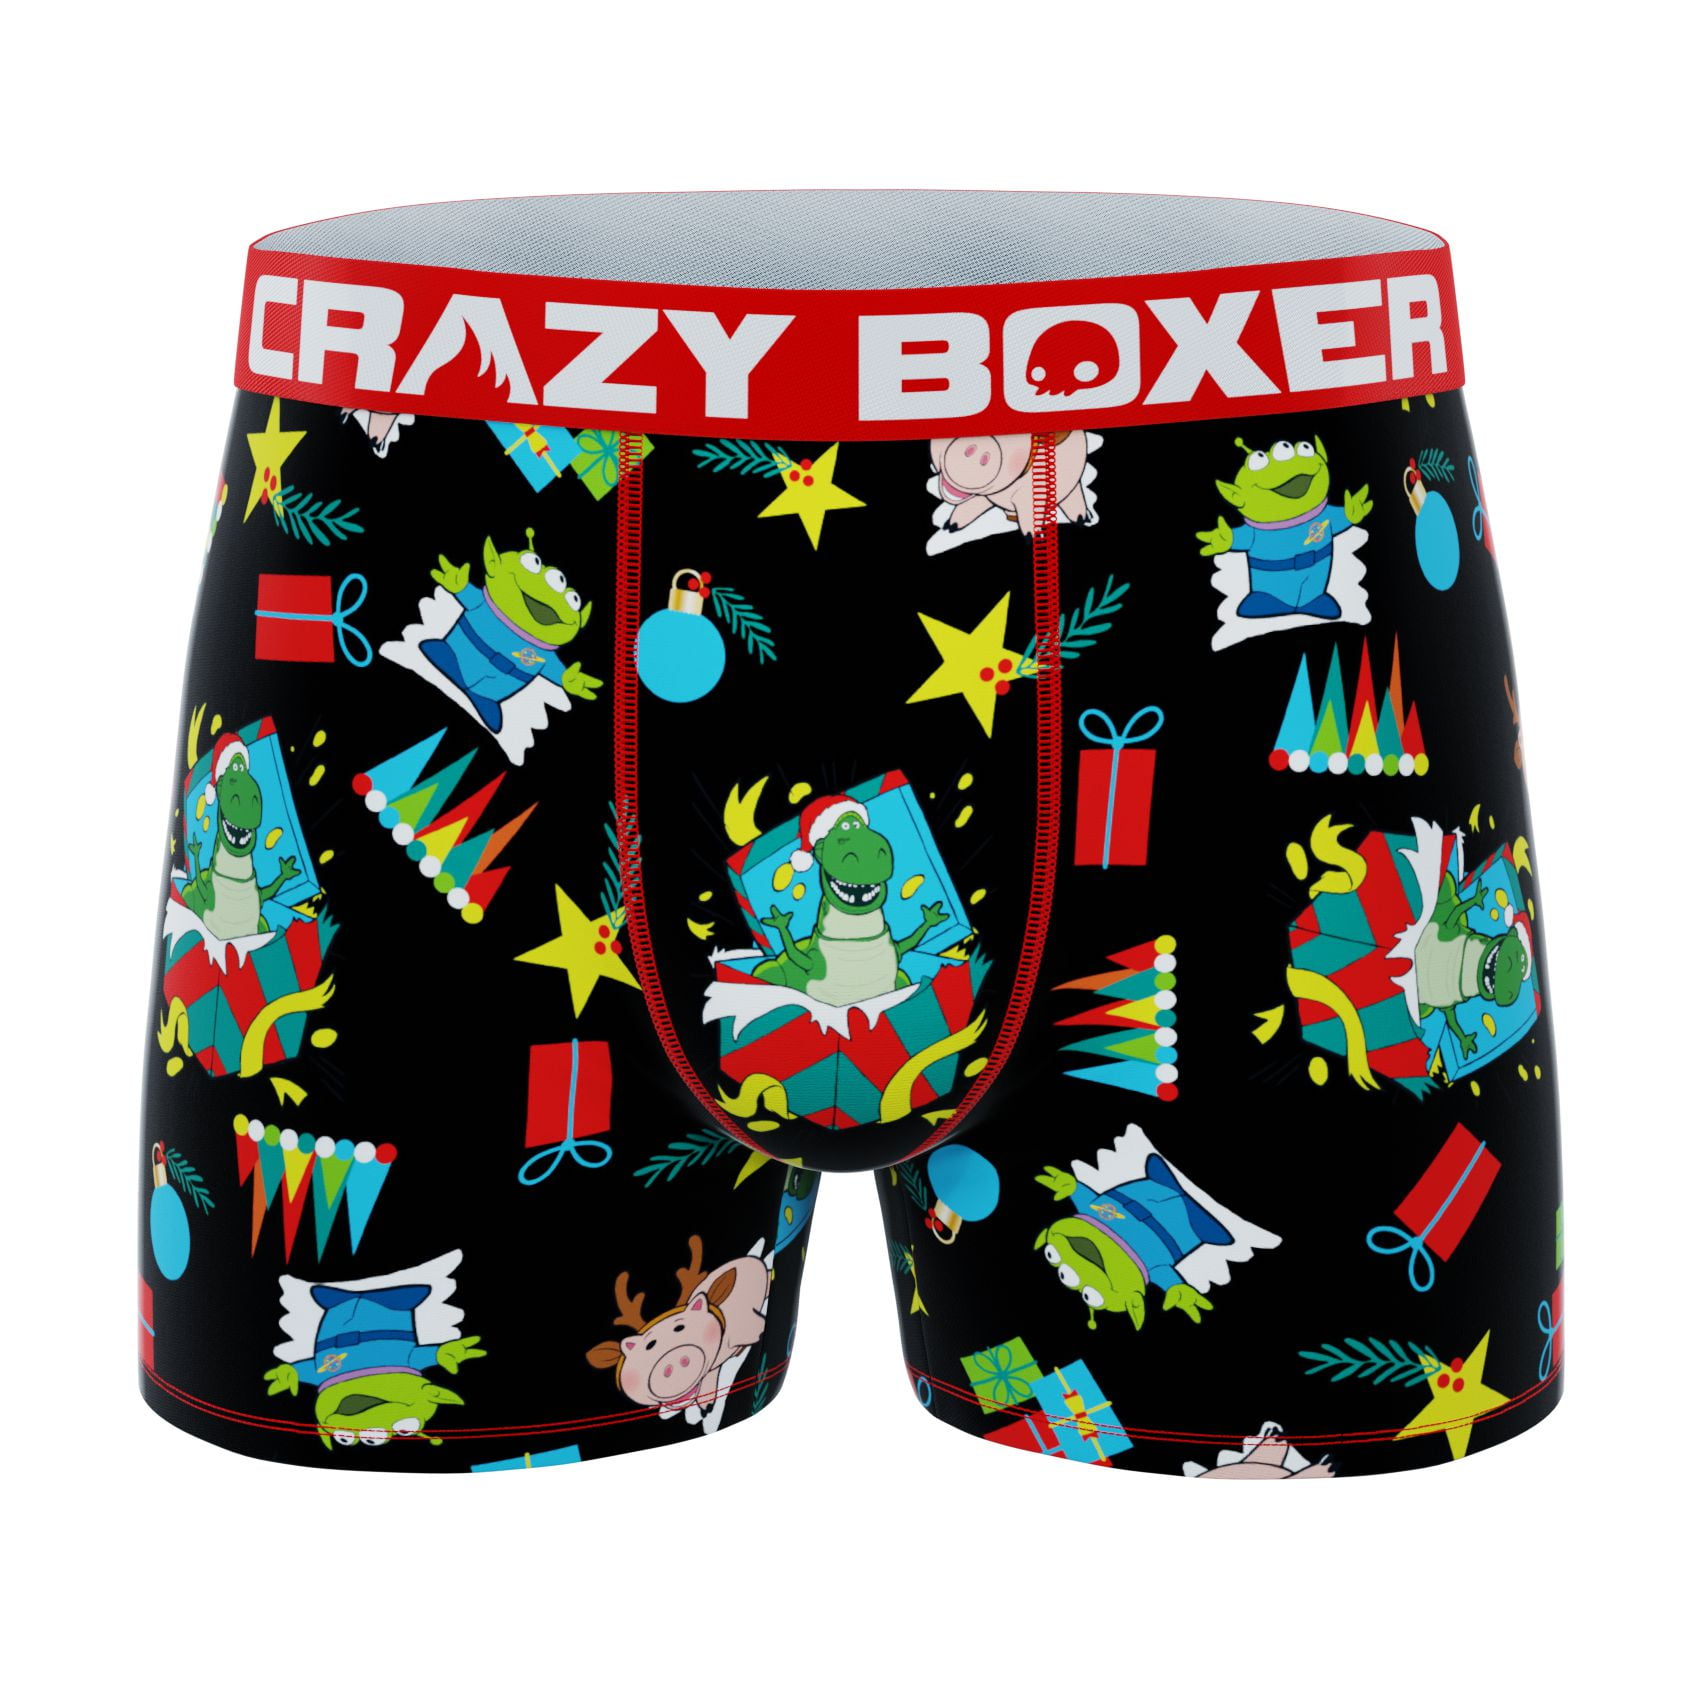 CRAZYBOXER Men's Underwear Toy Story Resistant Perfect fit Boxer